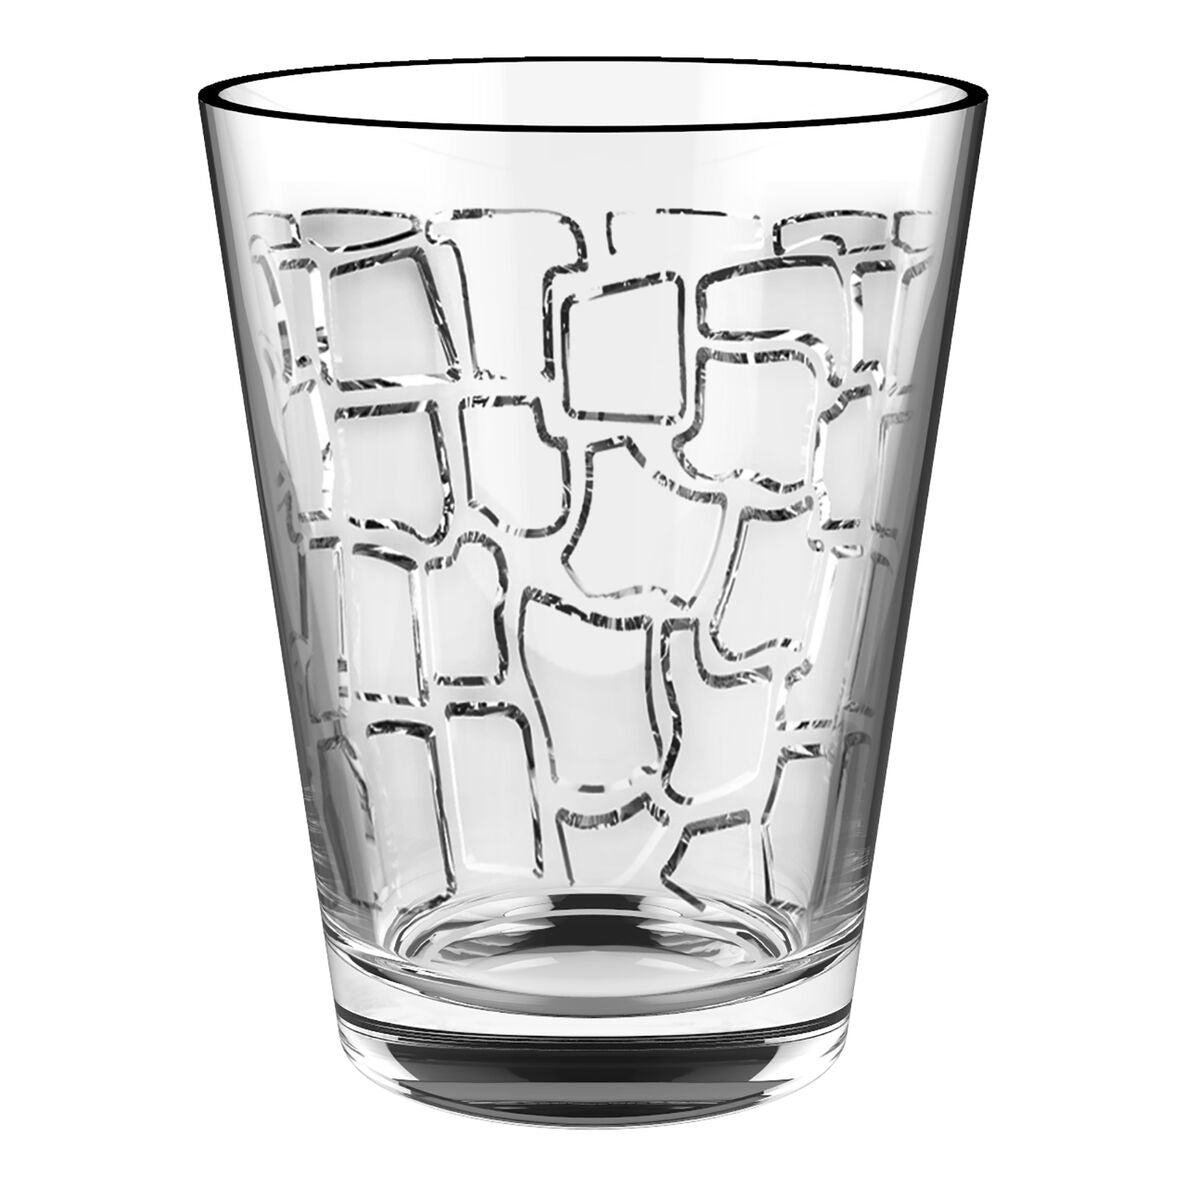 Glass Quid Urban Transparent Glass 6 Units 500 ml (Pack 6x)